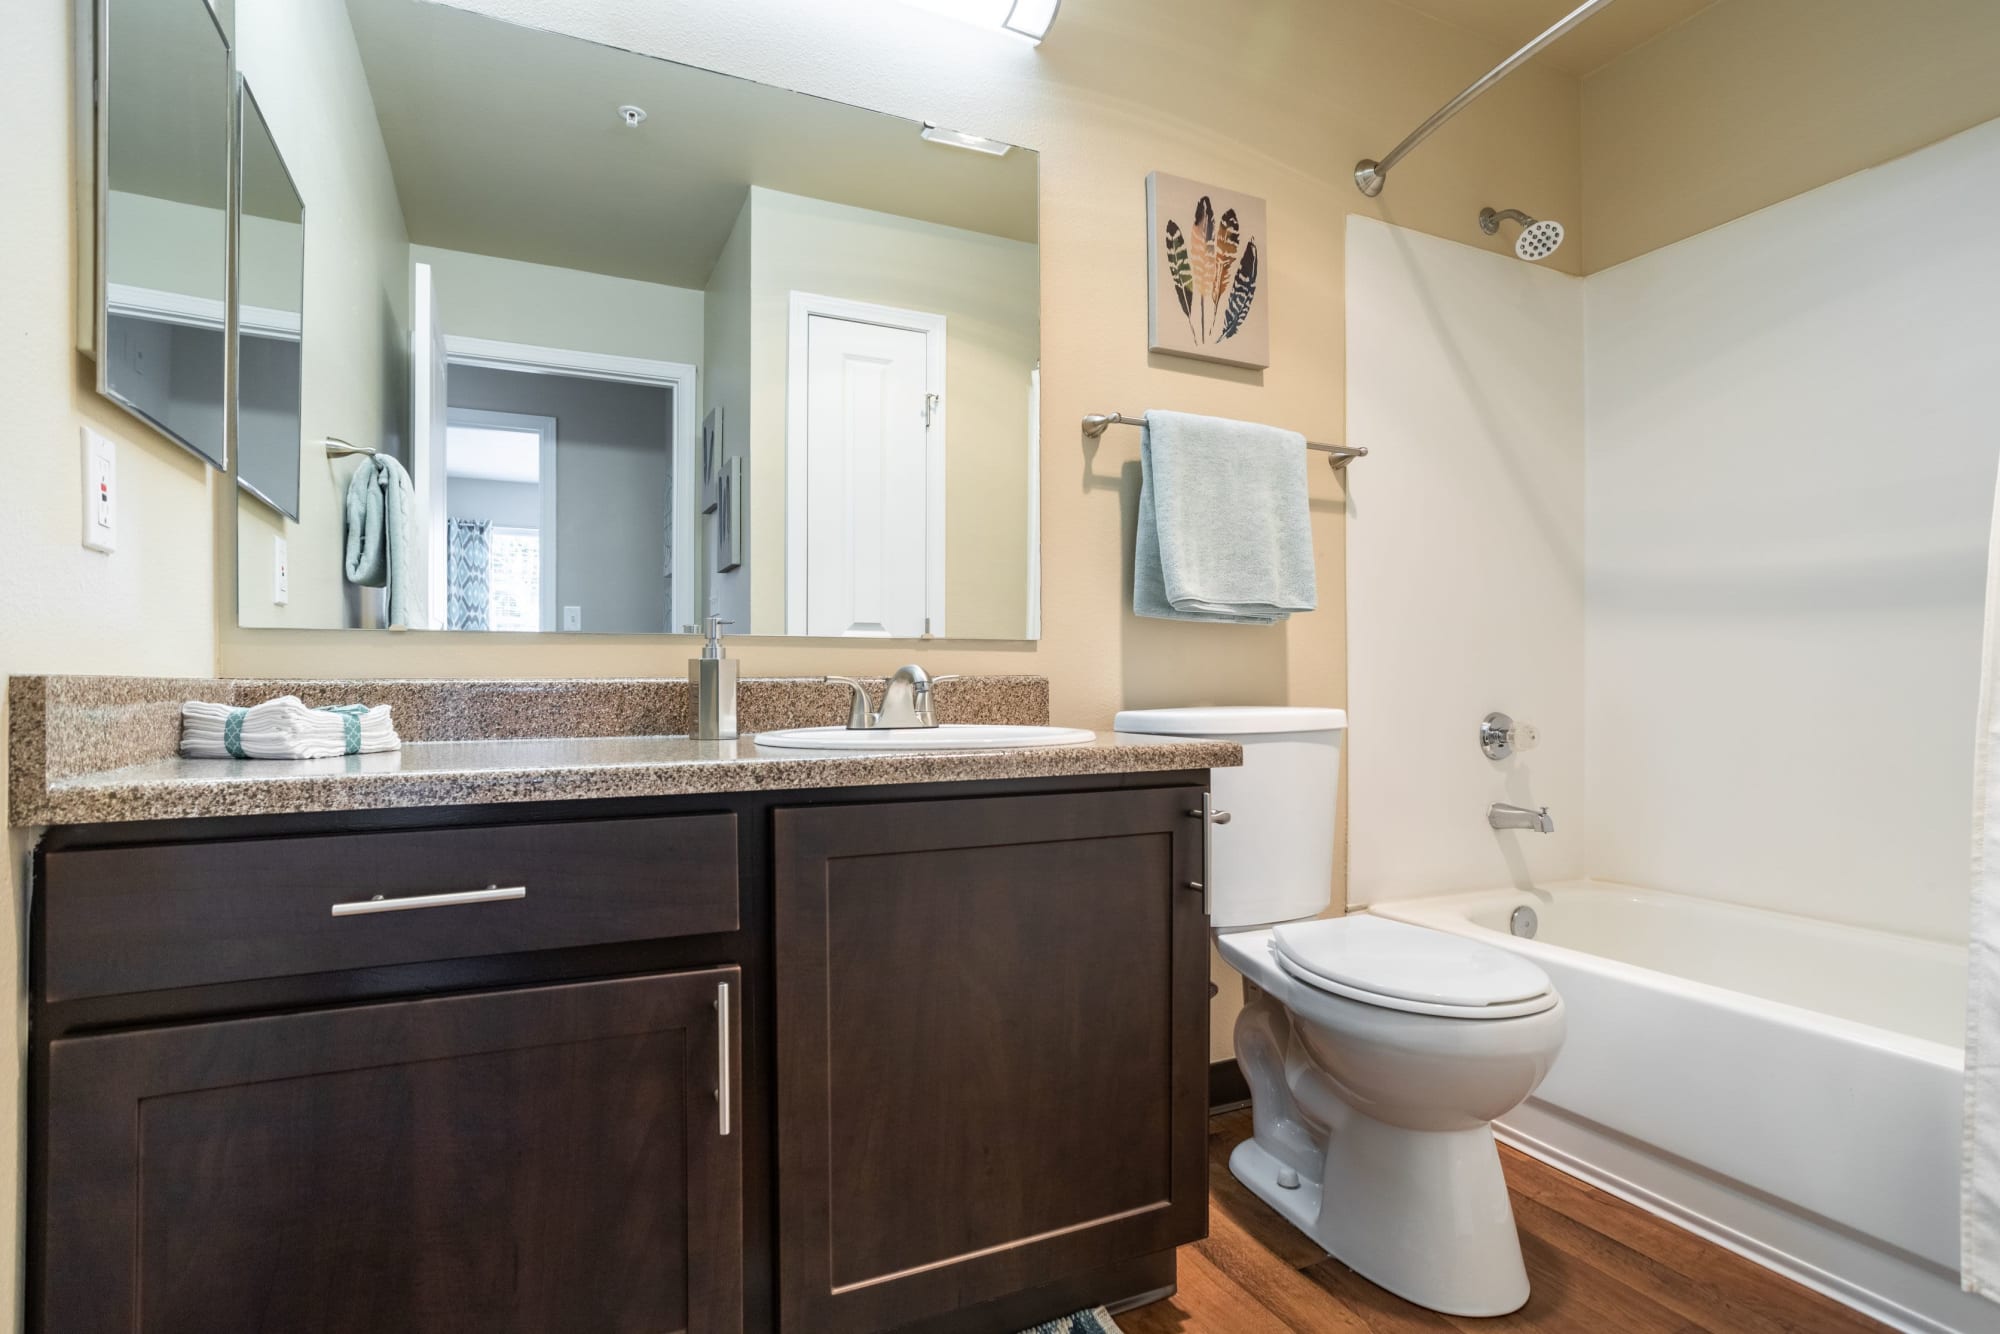 Renovated bathroom with a tub at Pebble Cove Apartments in Renton, Washington